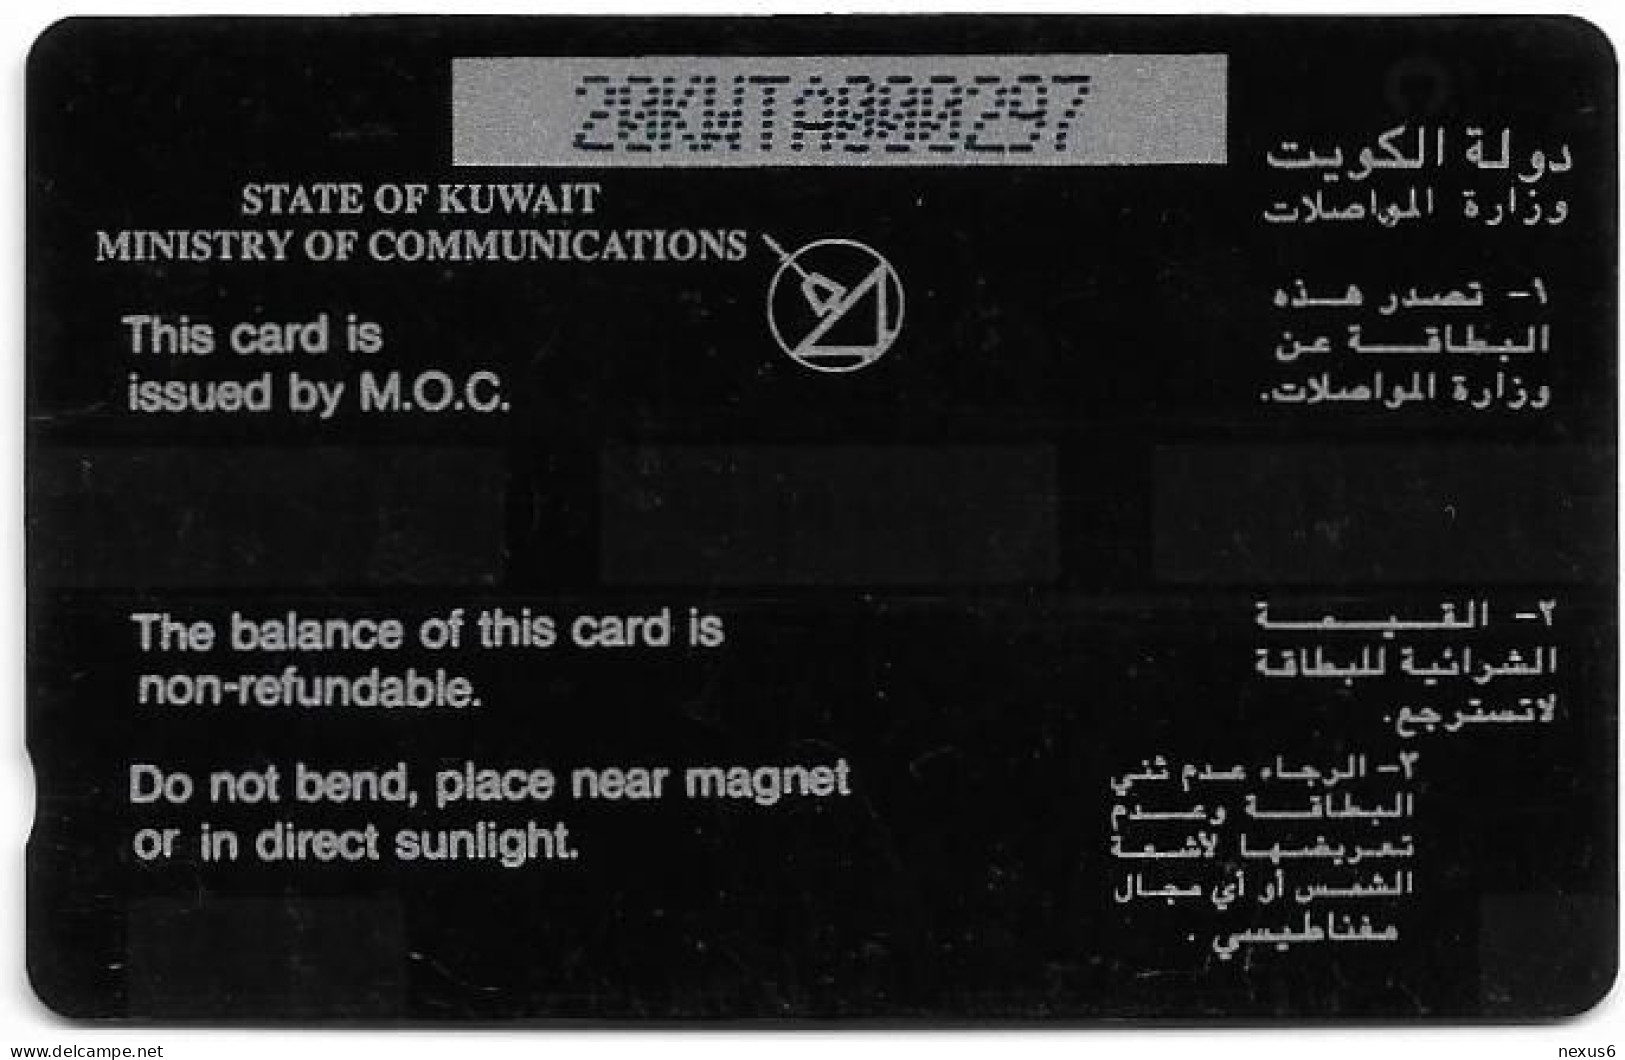 Kuwait - (GPT) - 10 Dinar Banknote - 20KWTA (Dashed Ø), 1994, Used - Kuwait